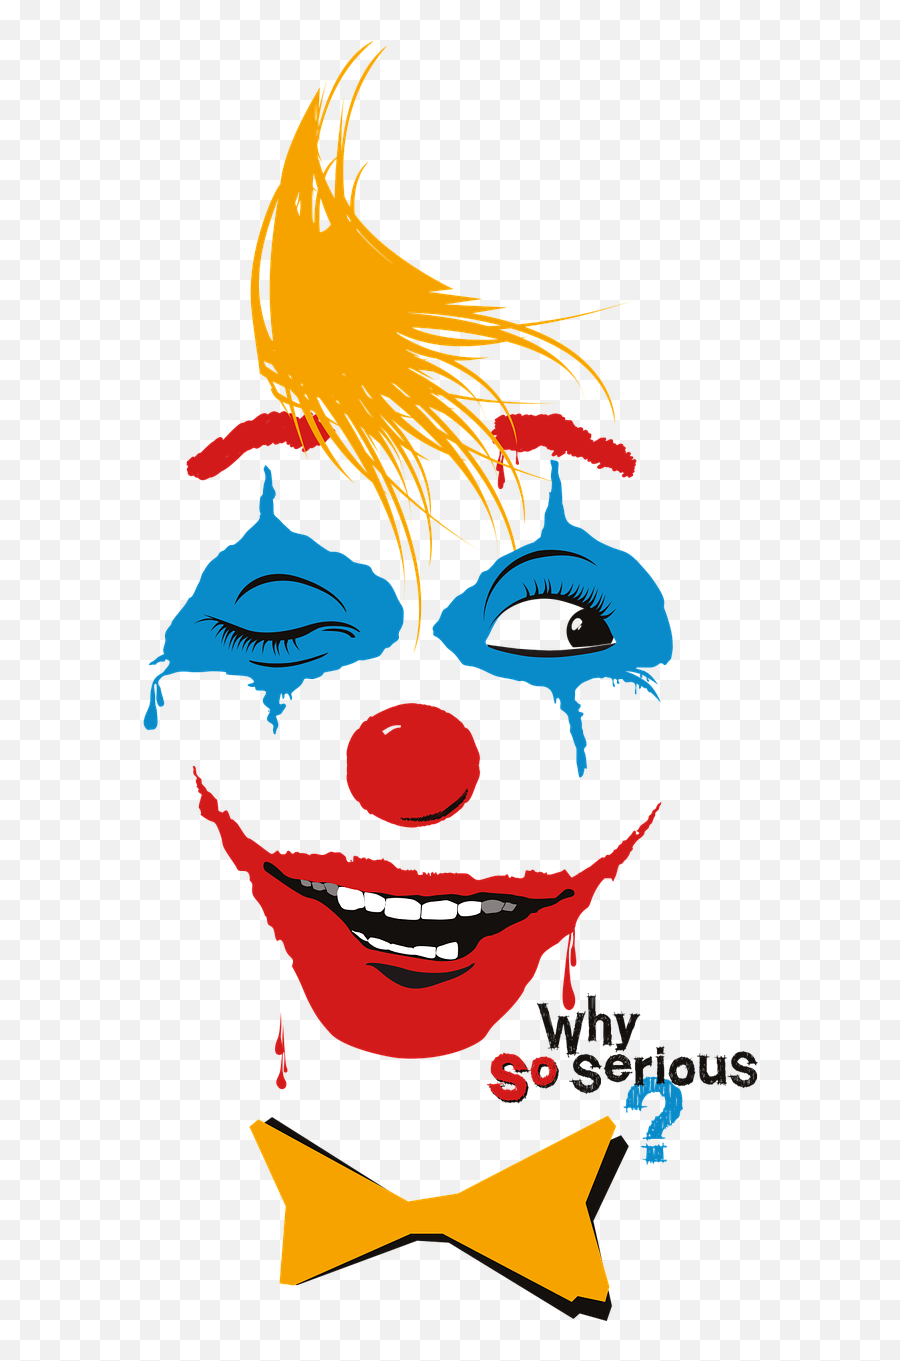 Clown Joker Jester - Clown Joker Emoji,Cartoon Clown Faces Emotions